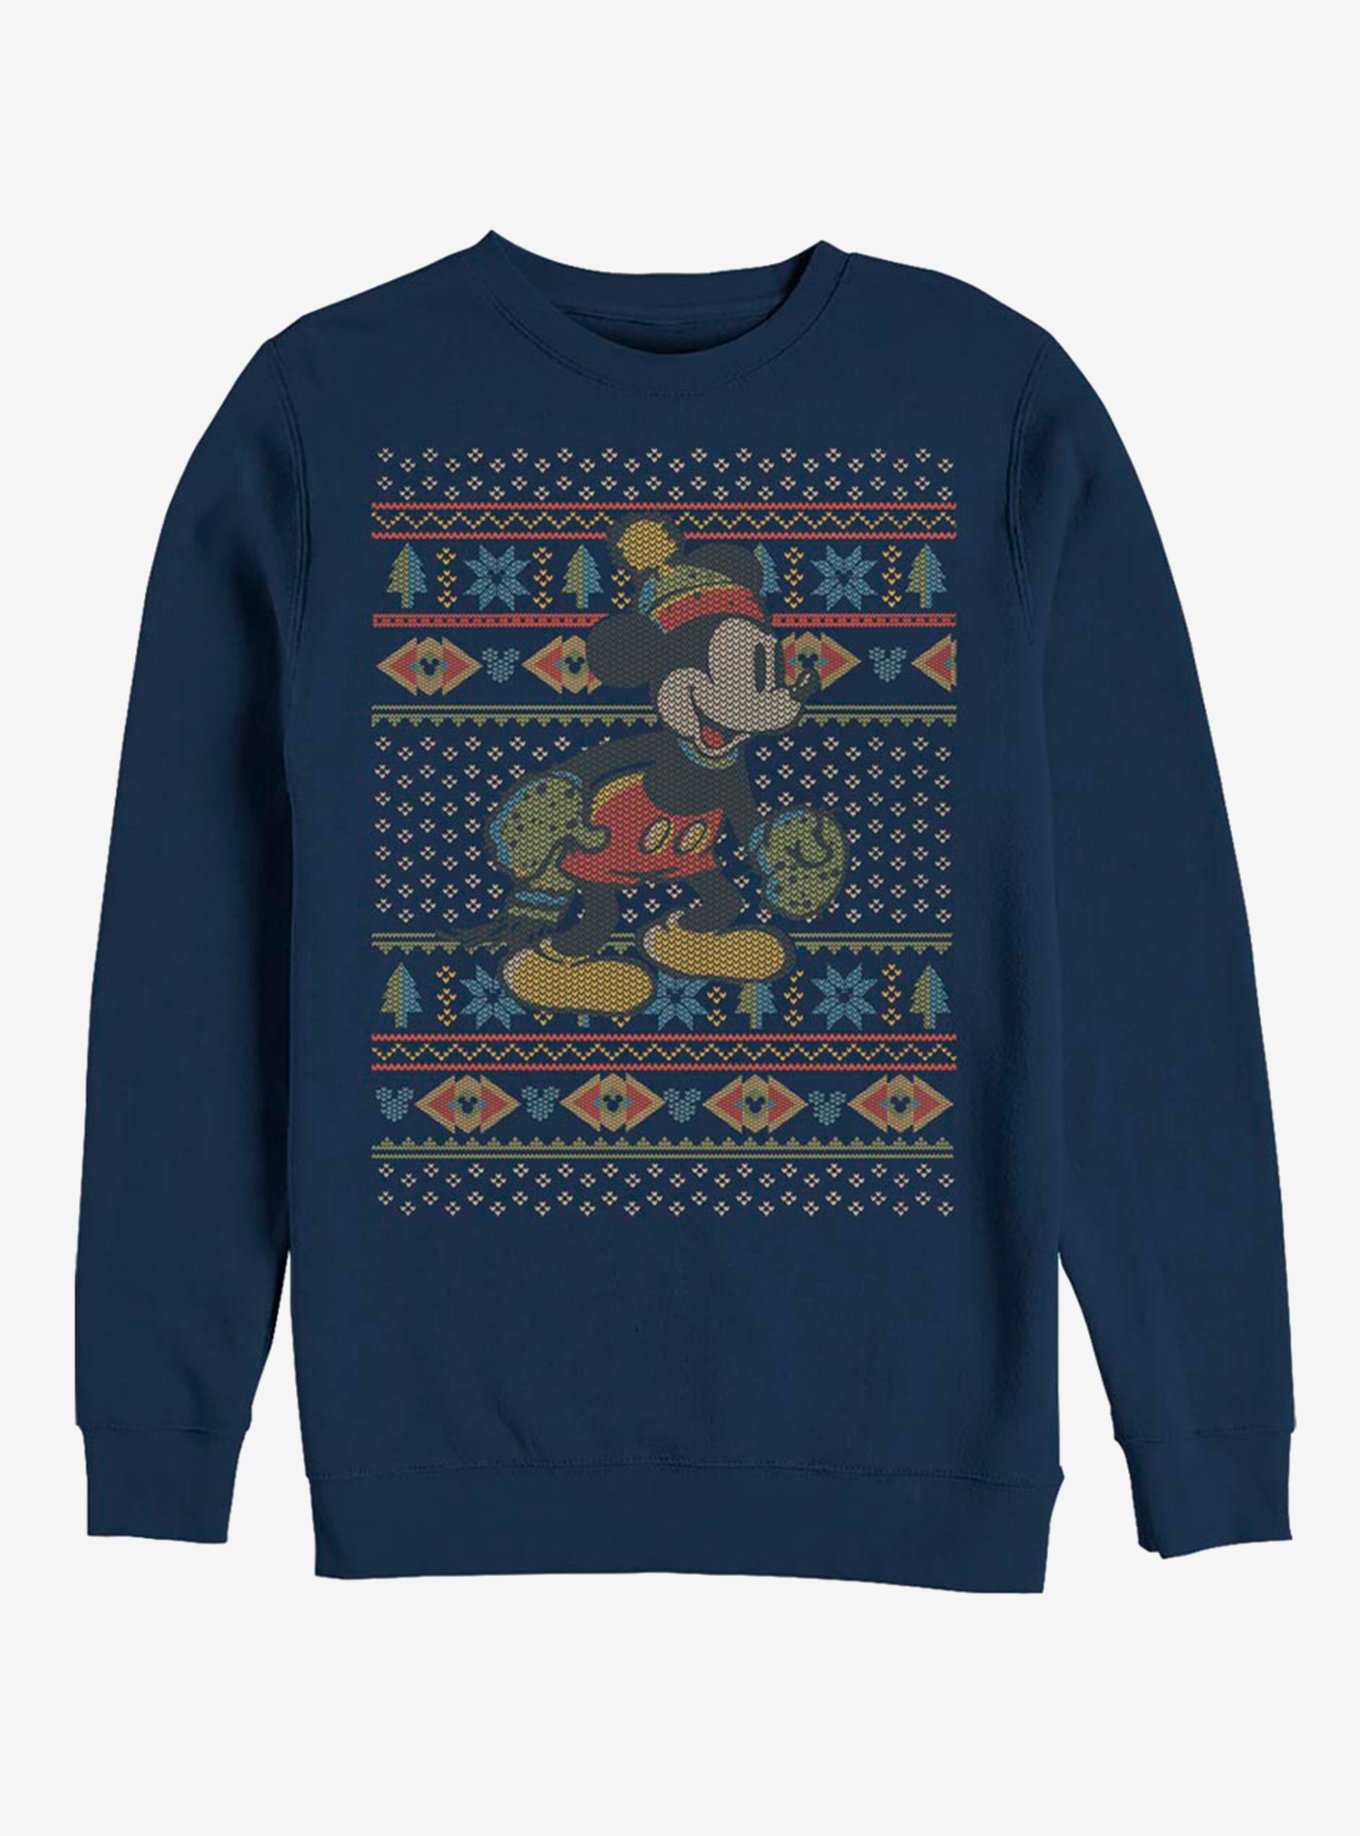 Disney Mickey Mouse Holiday Vintage Mickey Sweater Crew Sweatshirt, , hi-res